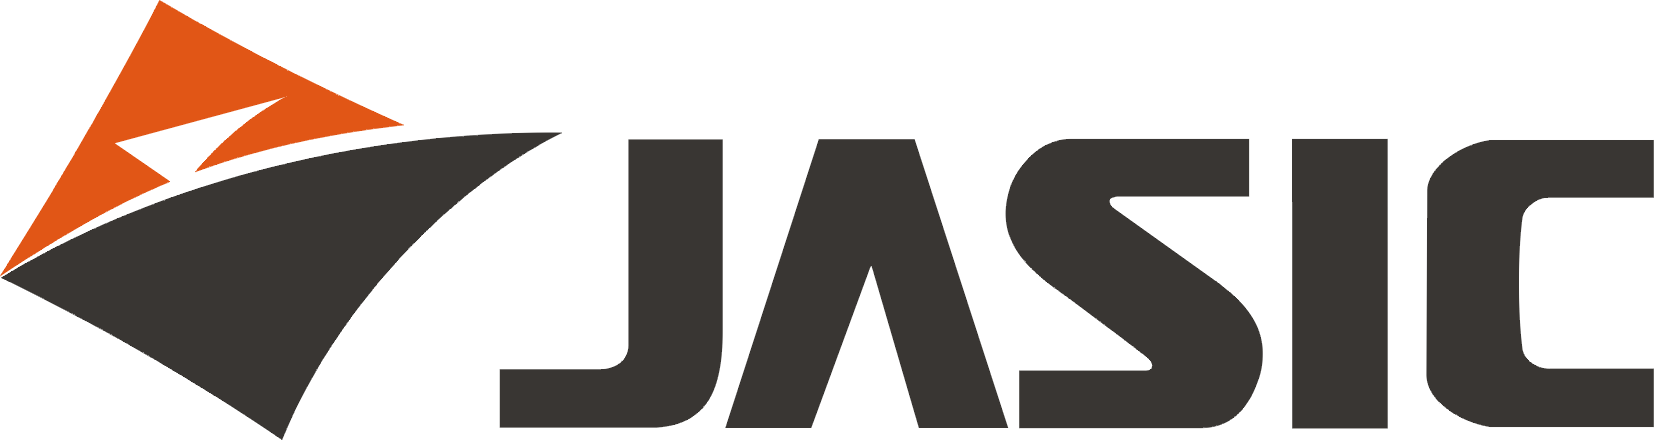 Fusion Solutions - Jasic - Welding Equipment